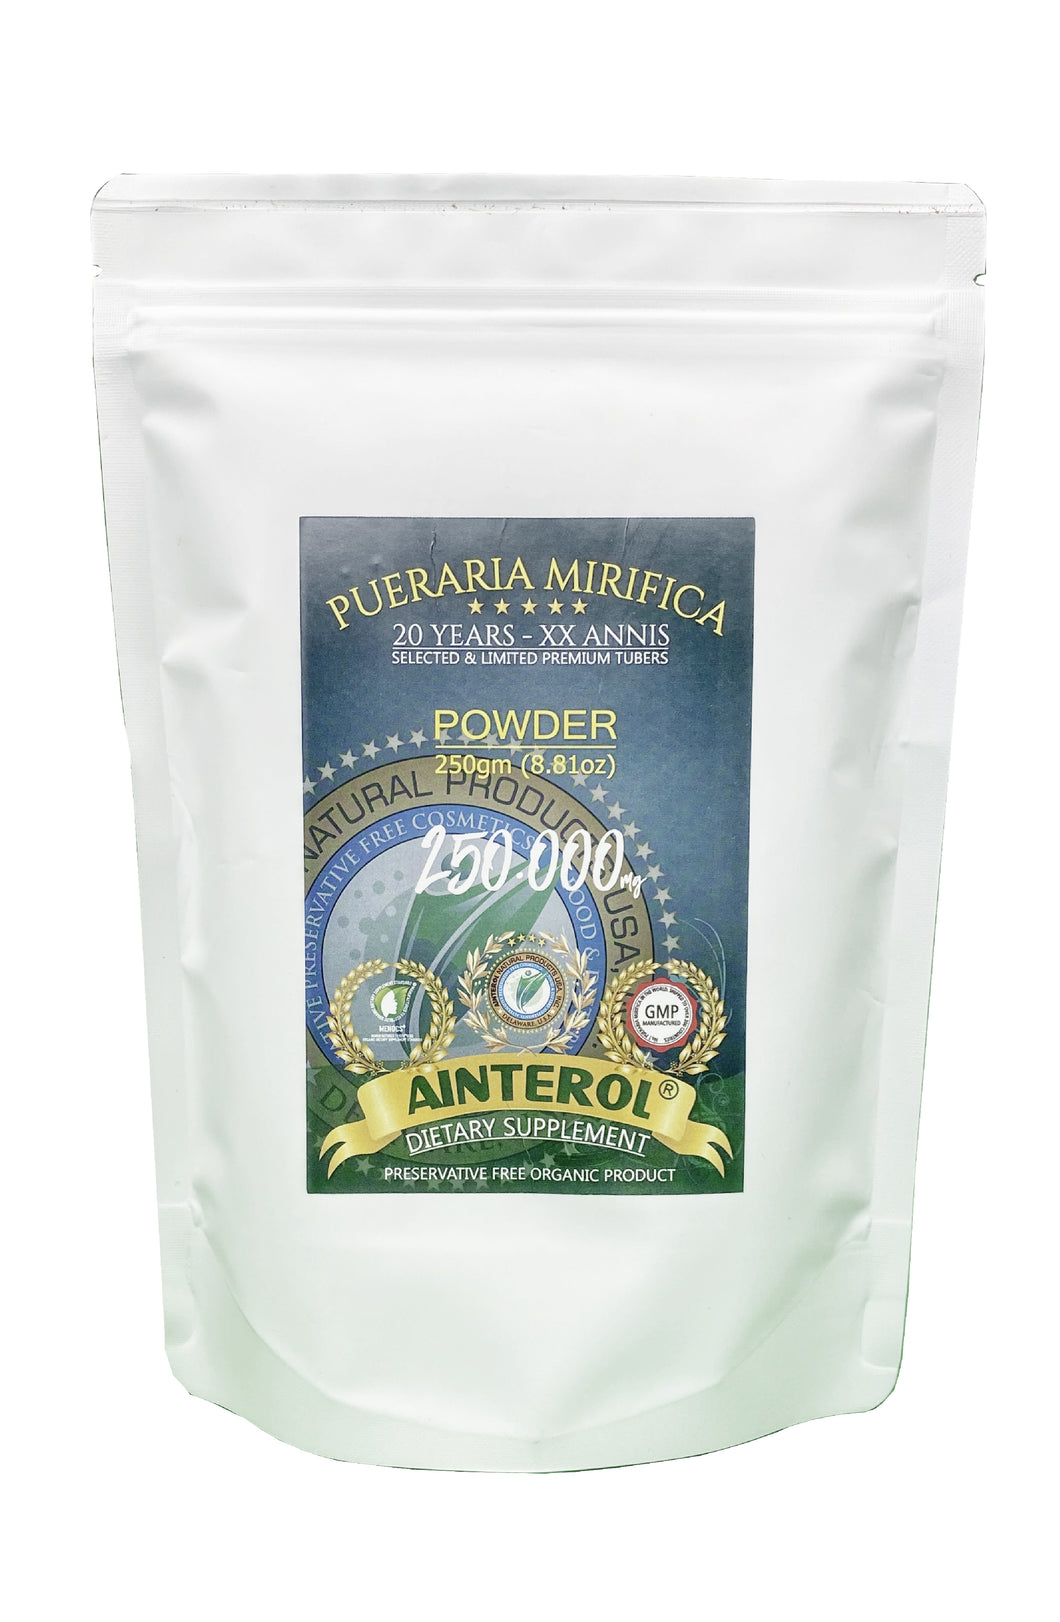 AINTEROL® Pueraria Mirifica Powder - 250gm (8.81oz)